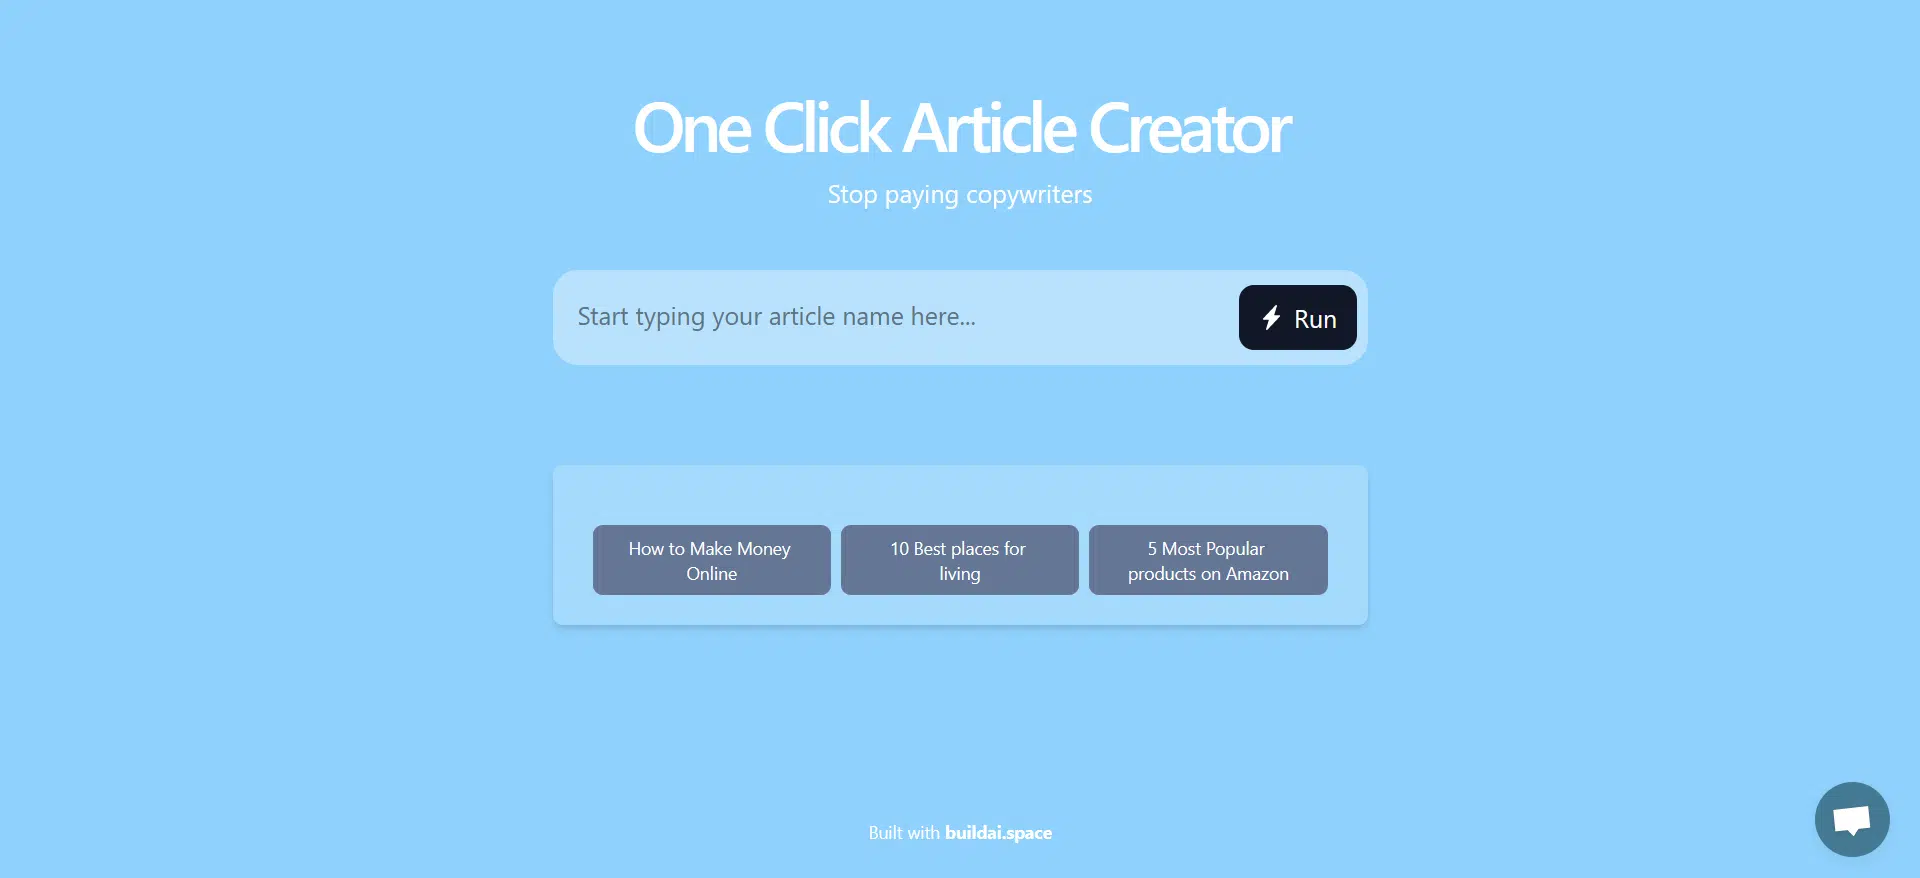 One Click Article Creatorwebsite picture